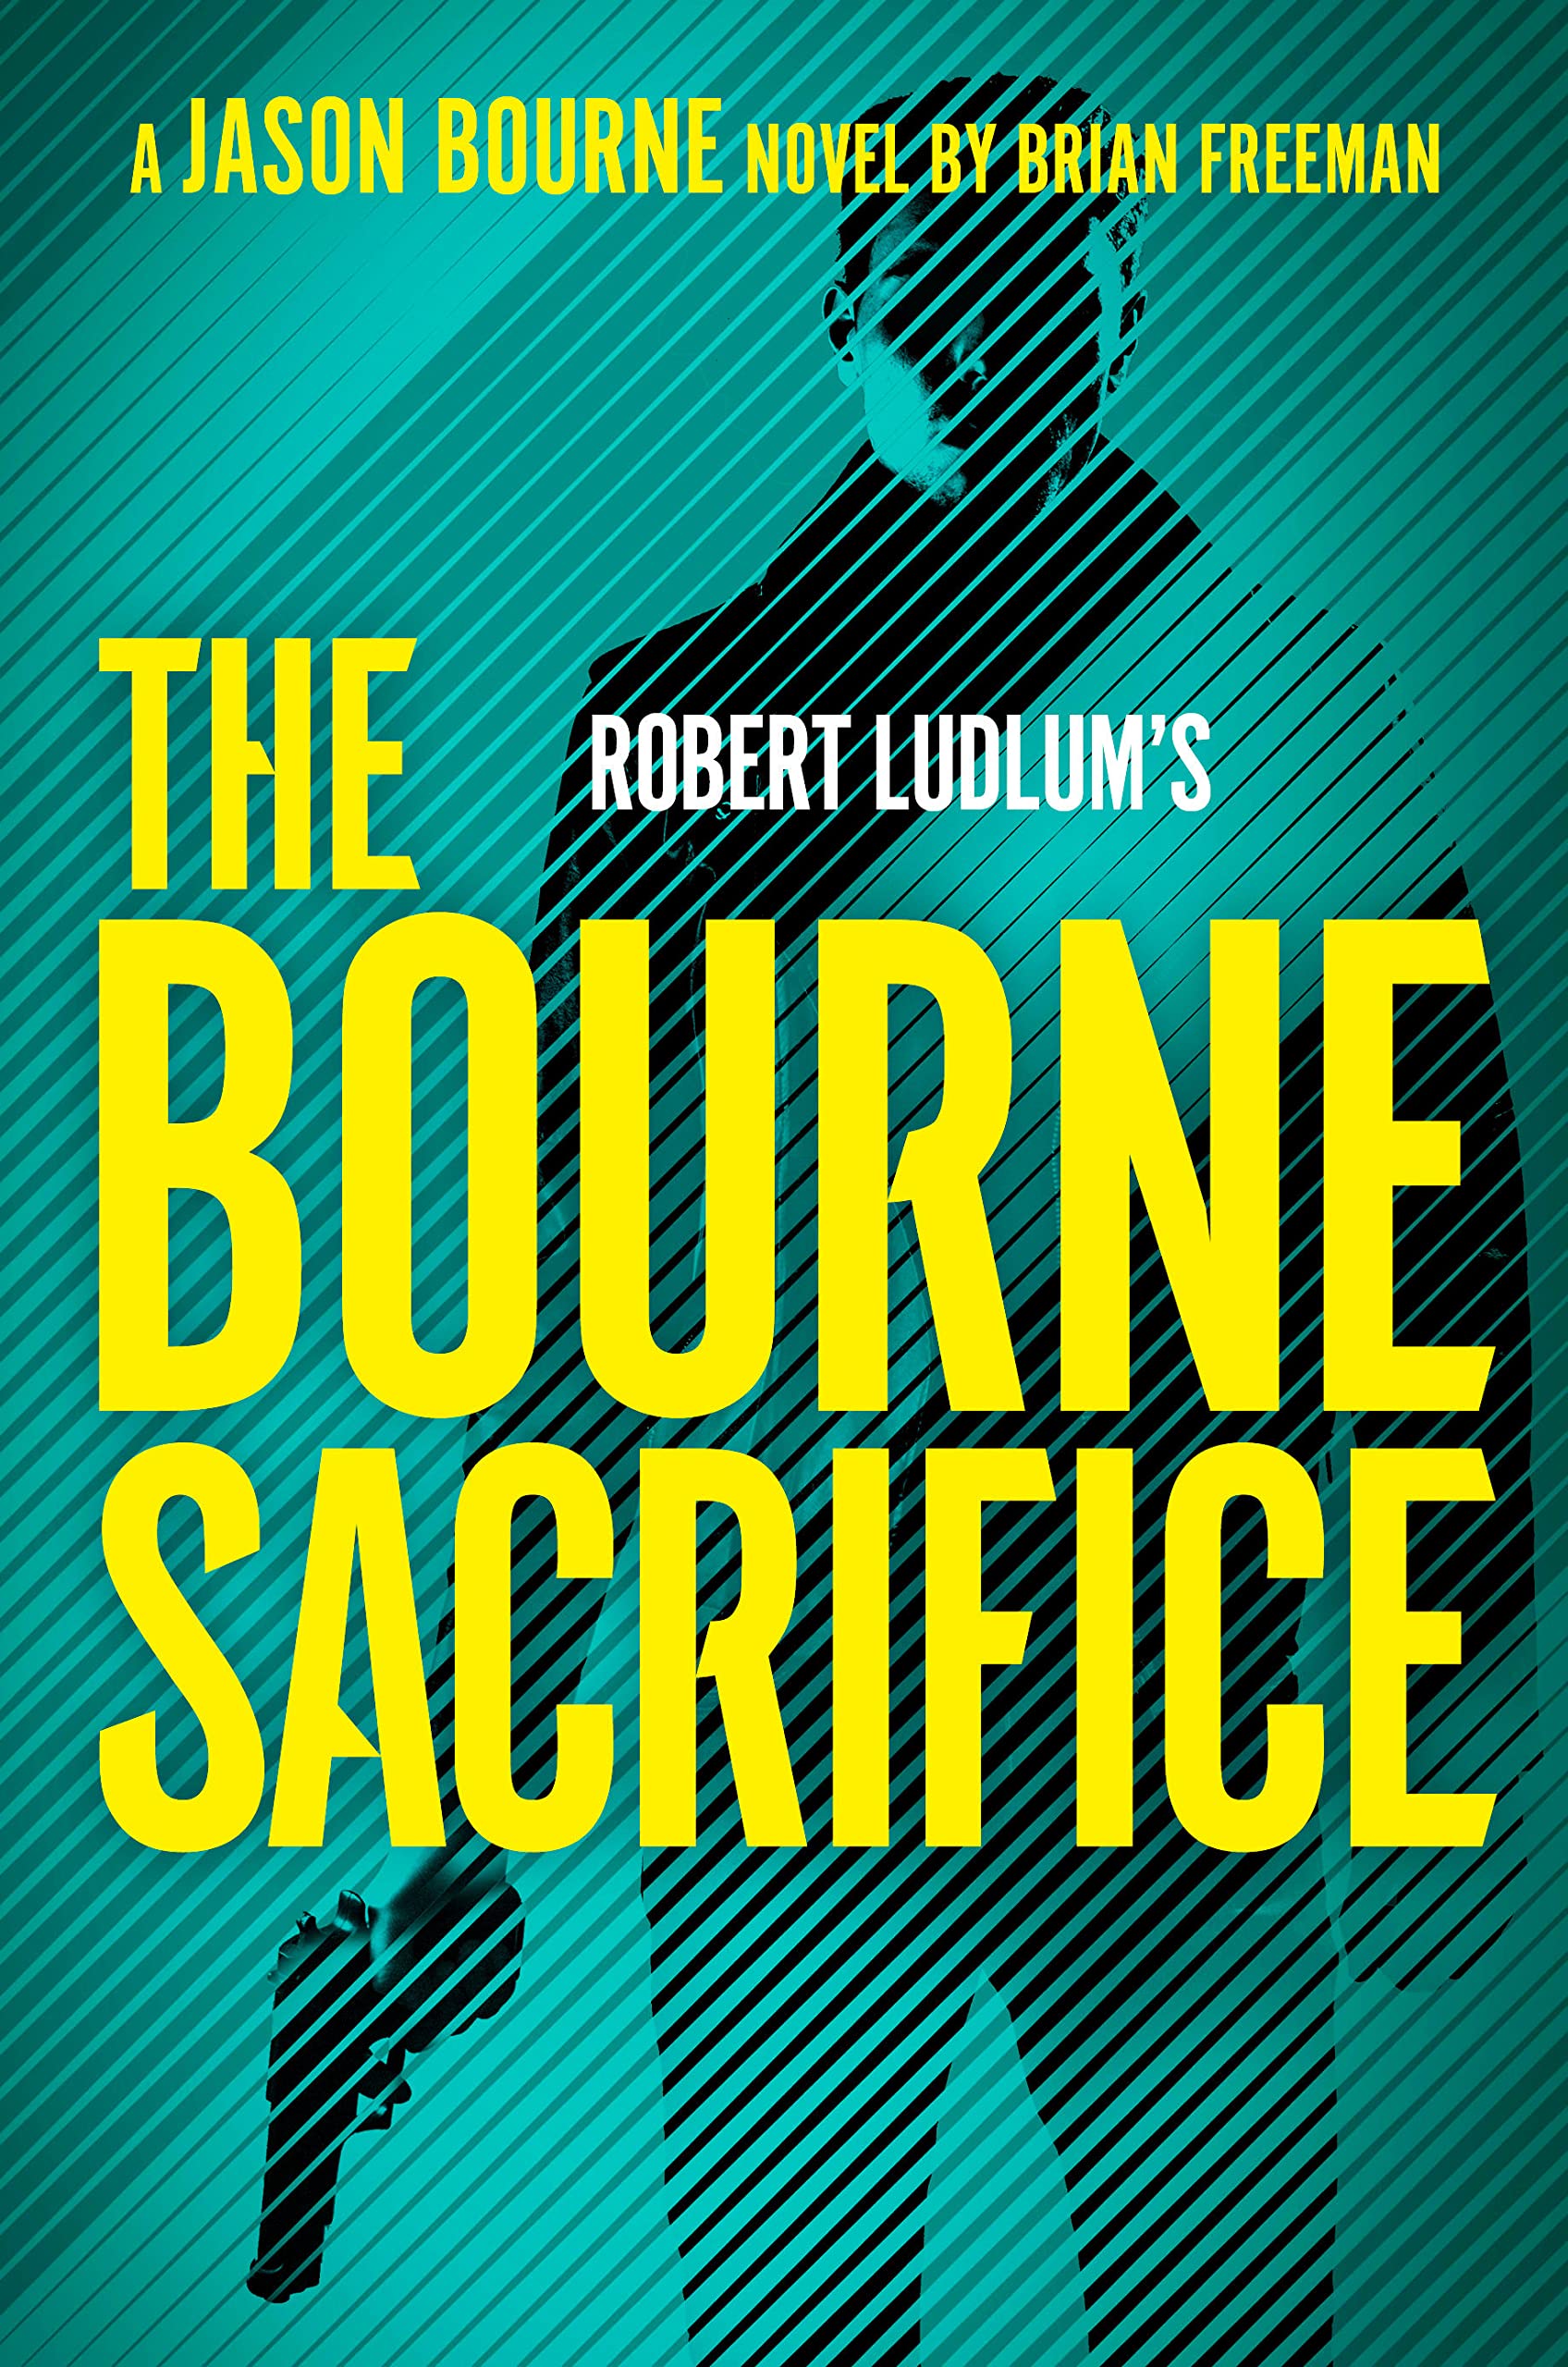 Image for "Robert Ludlum's The Bourne Sacrifice"